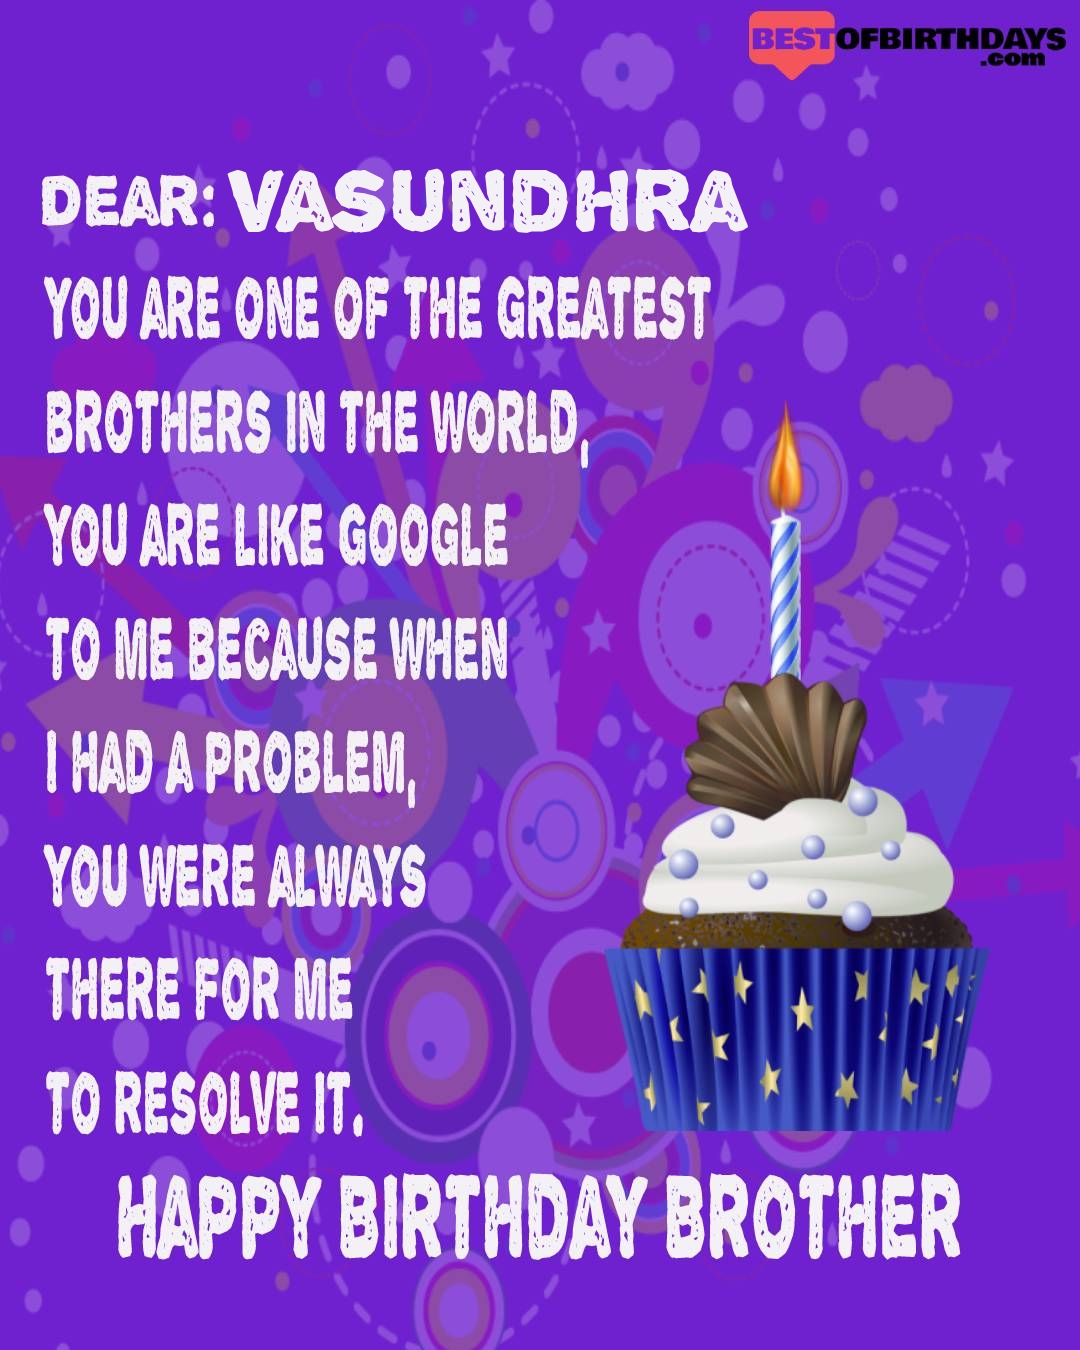 Happy birthday vasundhra bhai brother bro